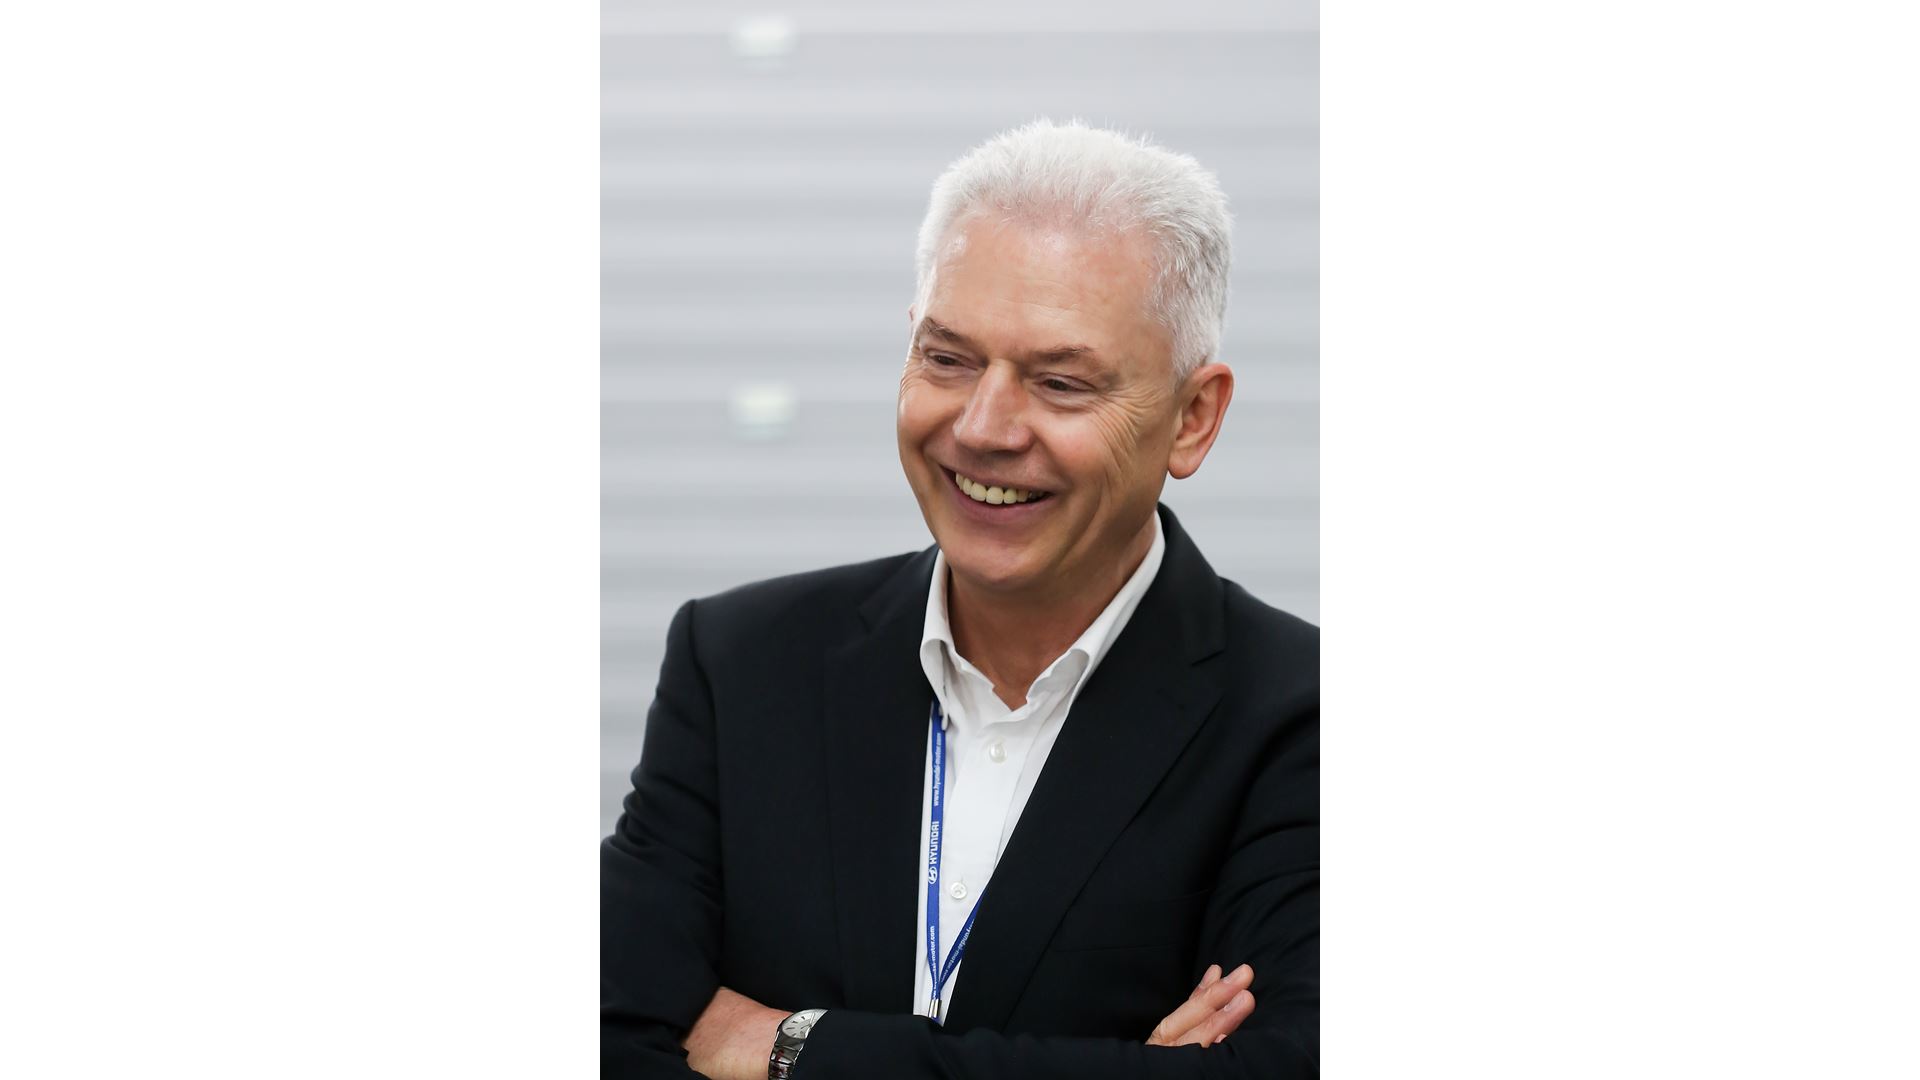 Hyundai Motor Group’s President Albert Biermann Retires as Head of R&D to Continue as Executive Technical Advisor based